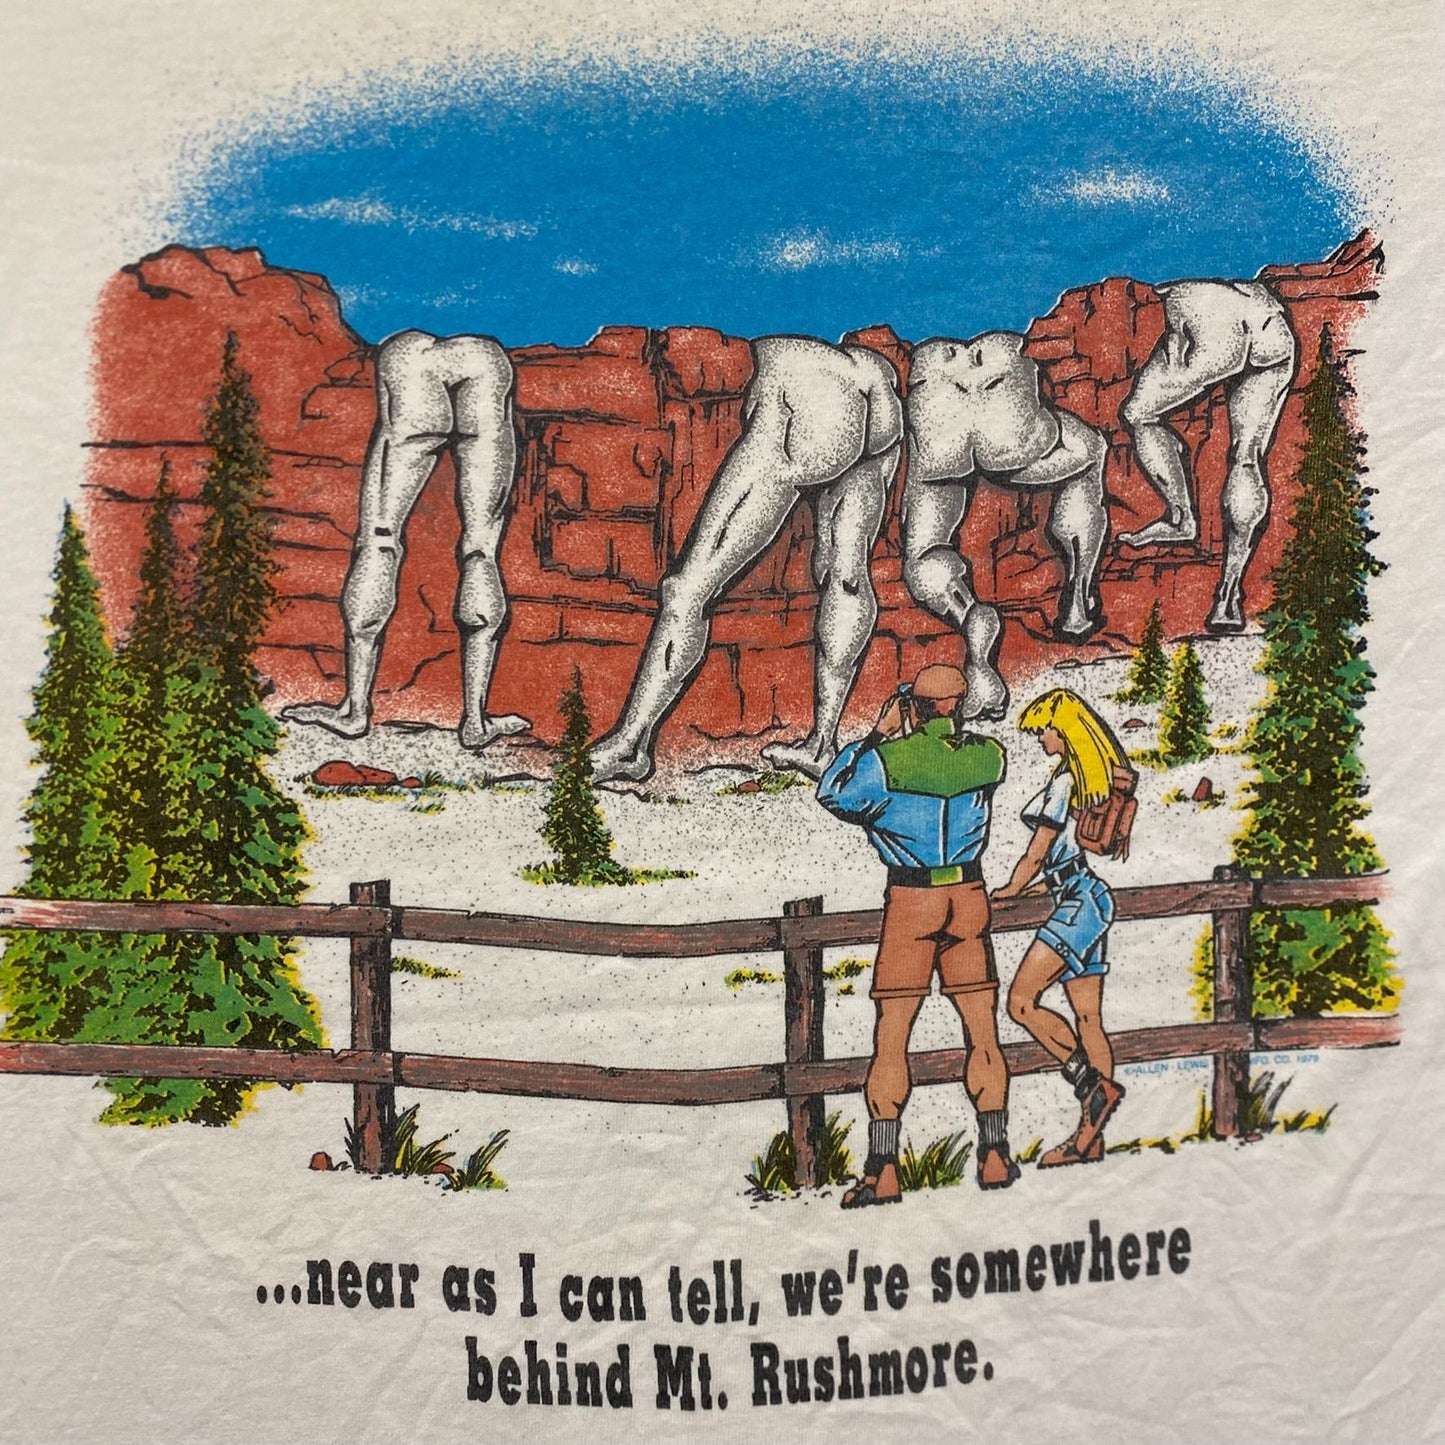 Vintage 90s Mount Rushmore Funny Tourist Humor T-Shirt